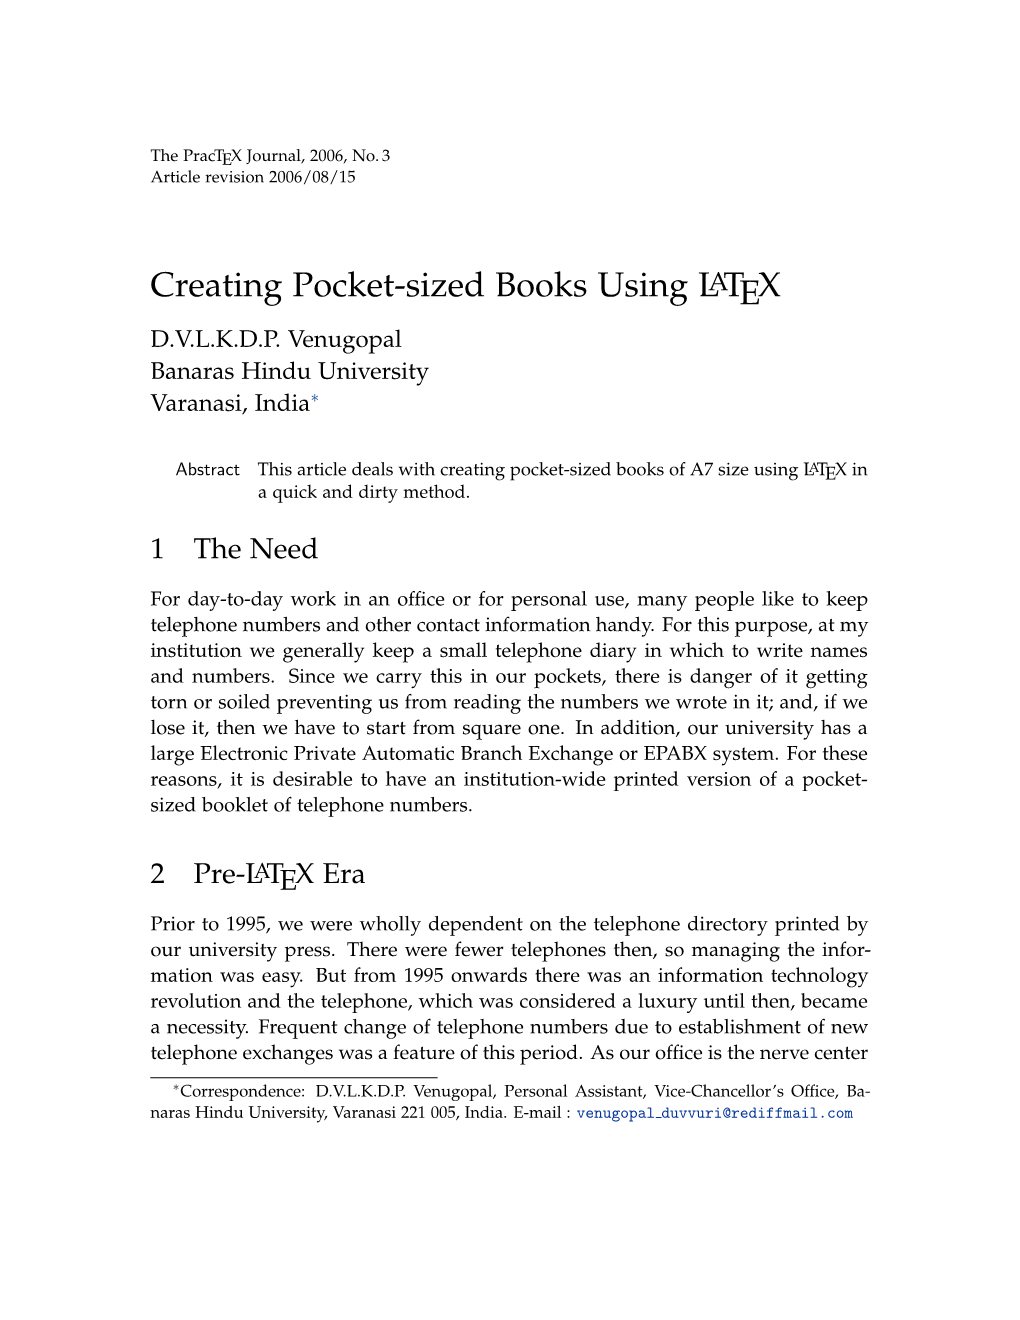 Creating Pocket-Sized Books Using LATEX D.V.L.K.D.P